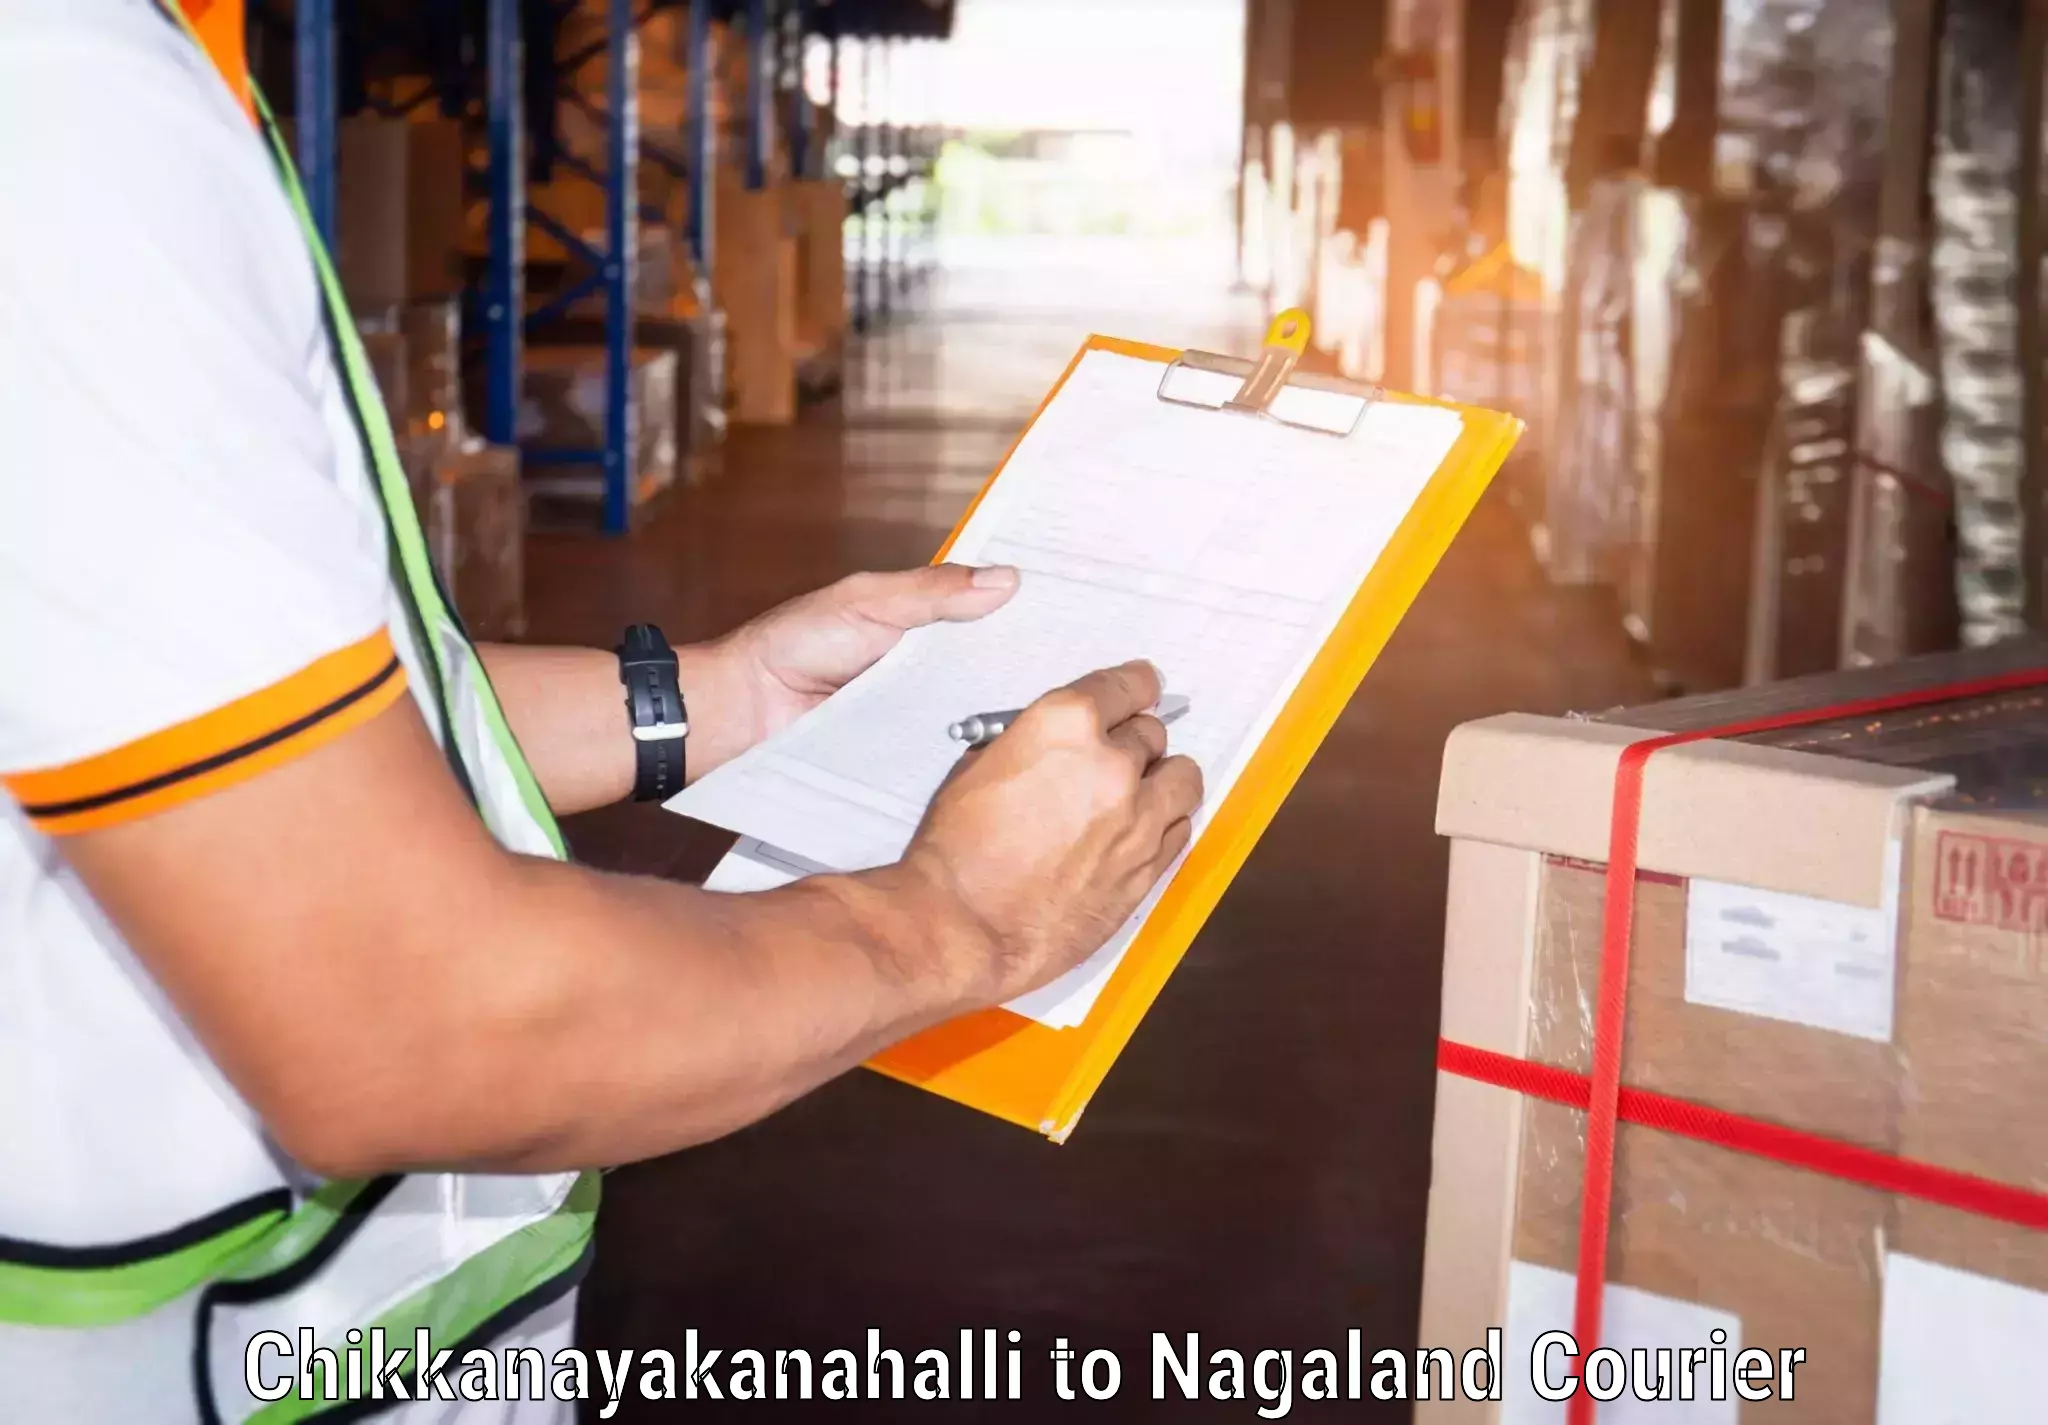 Logistics efficiency in Chikkanayakanahalli to Nagaland